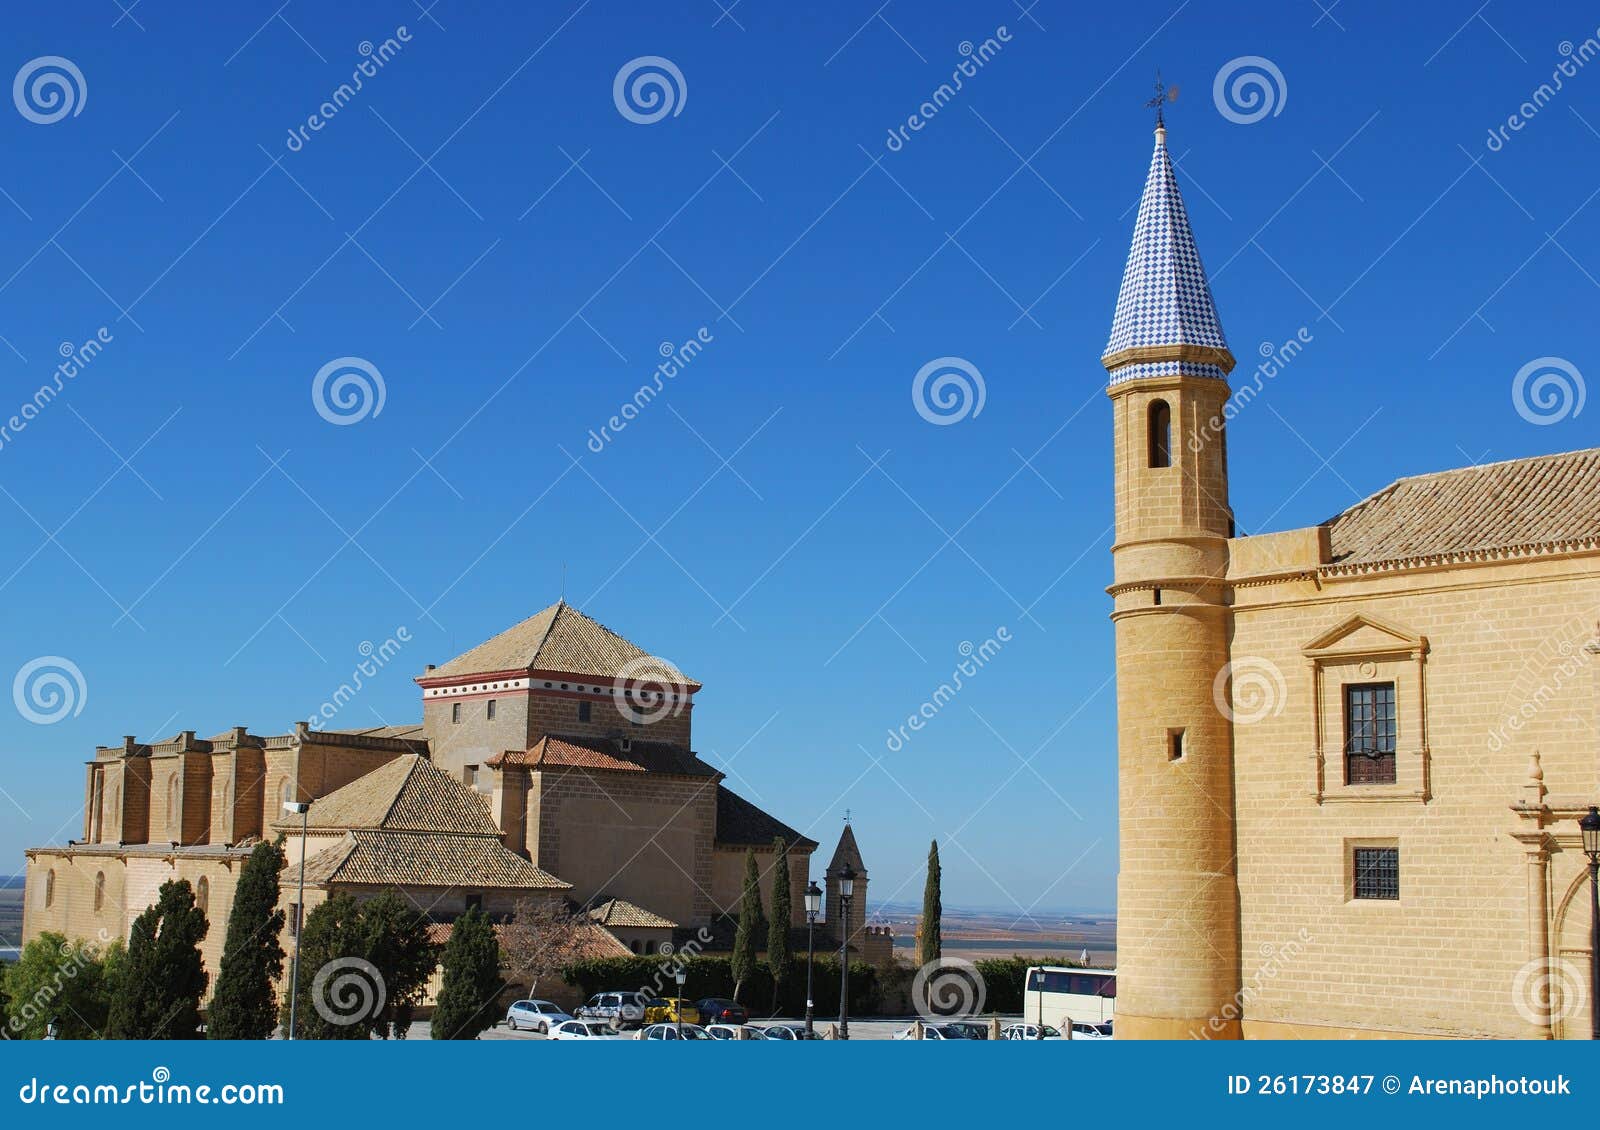 university and santa maria church, osuna, spain.